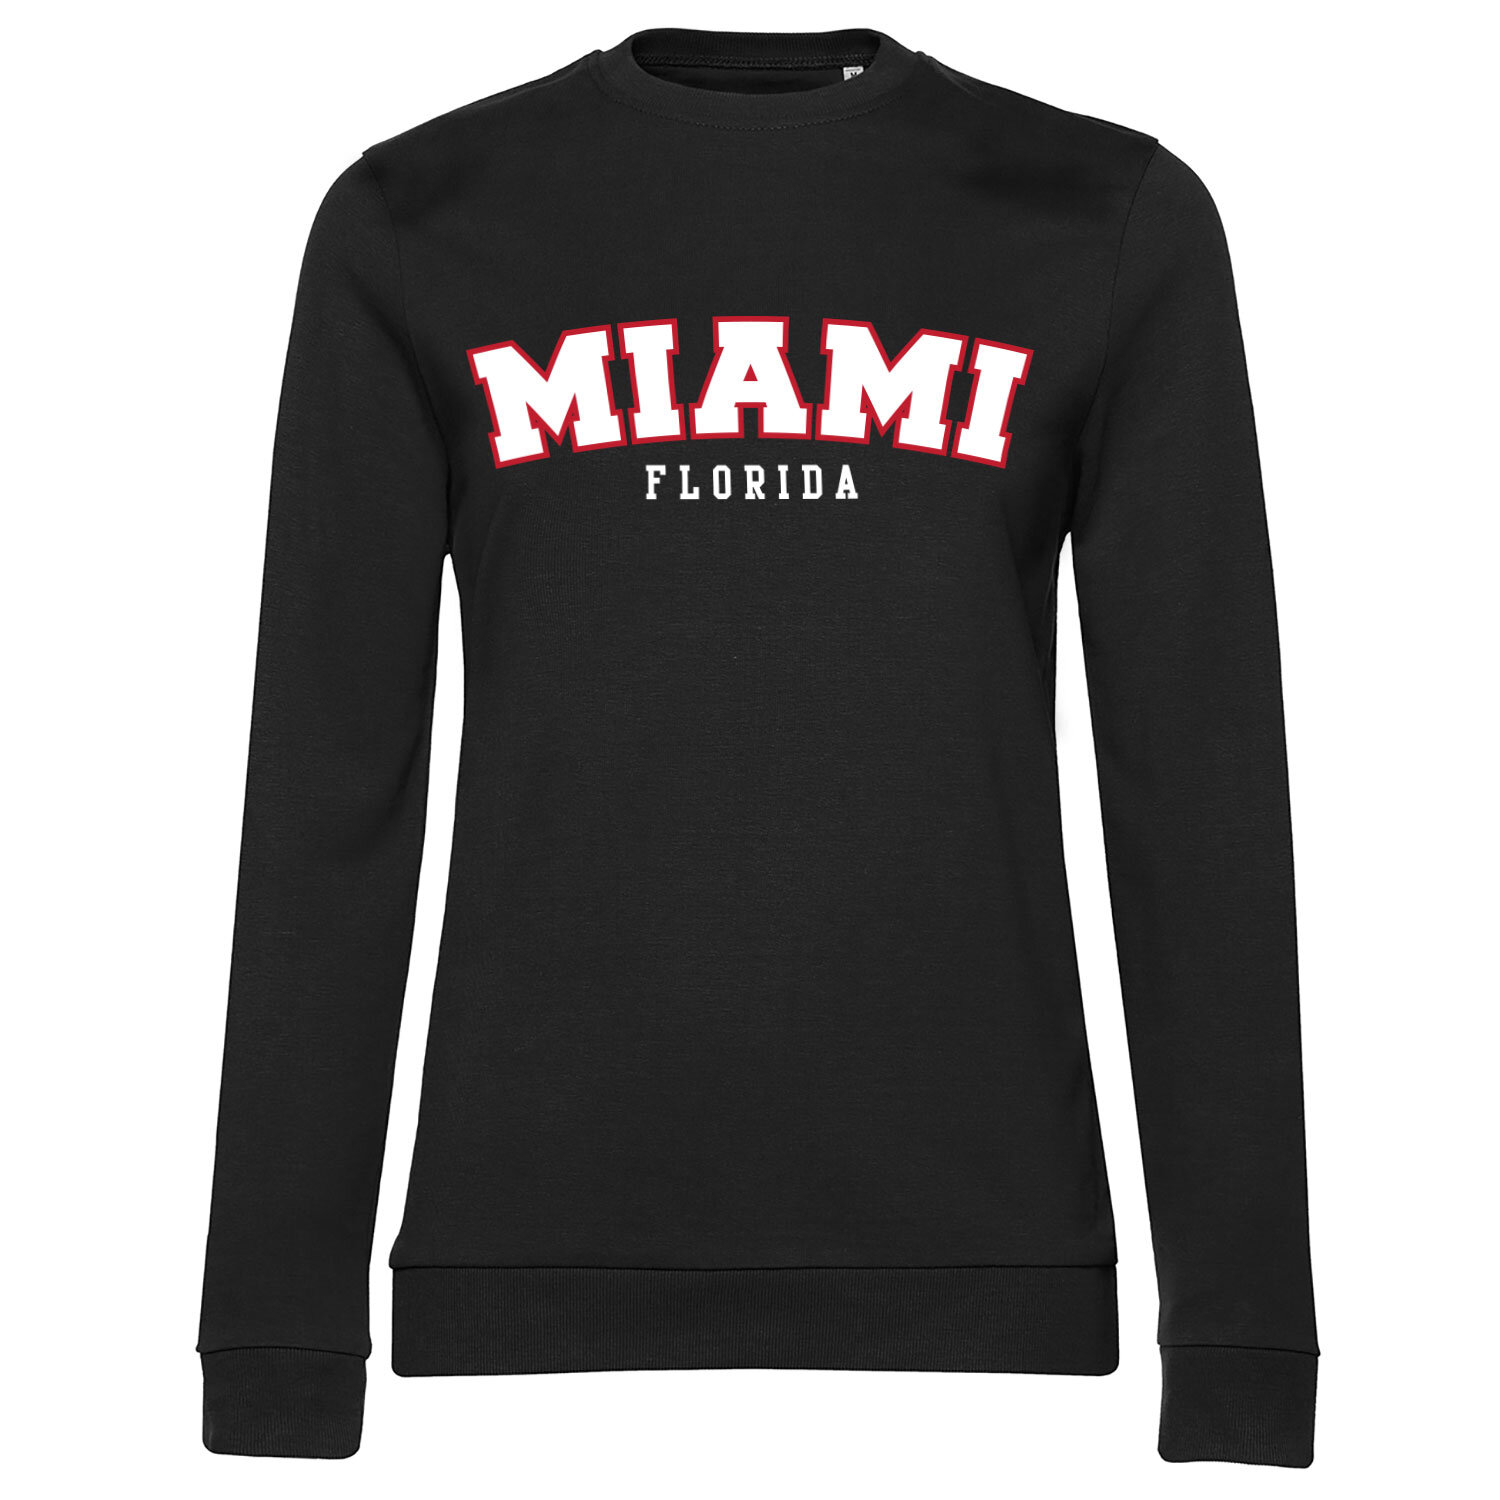 Miami - Florida Girly Sweatshirt